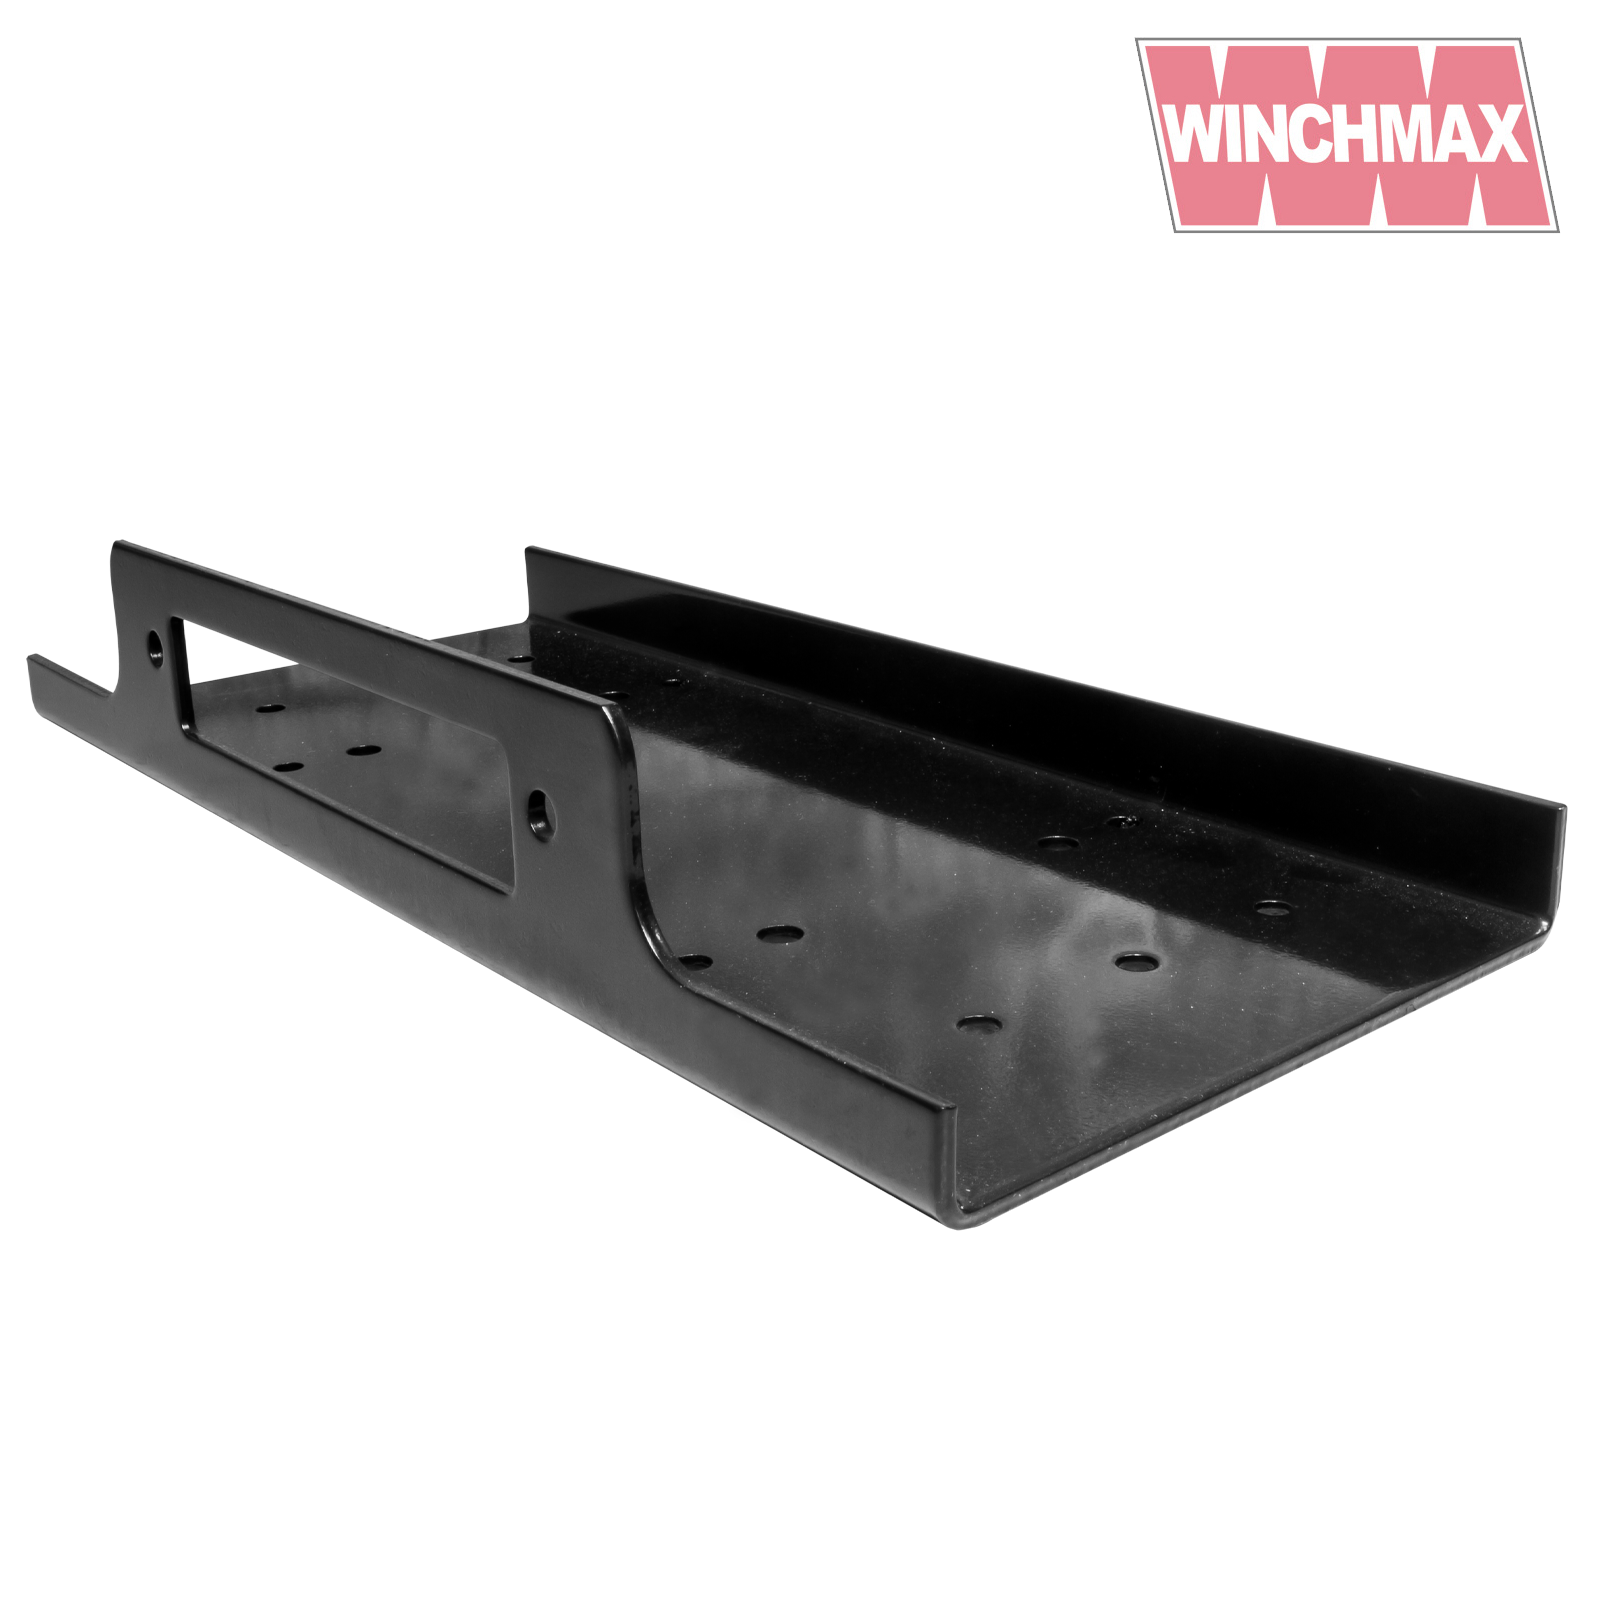 Winchmax WMMP3 winch mounting plate